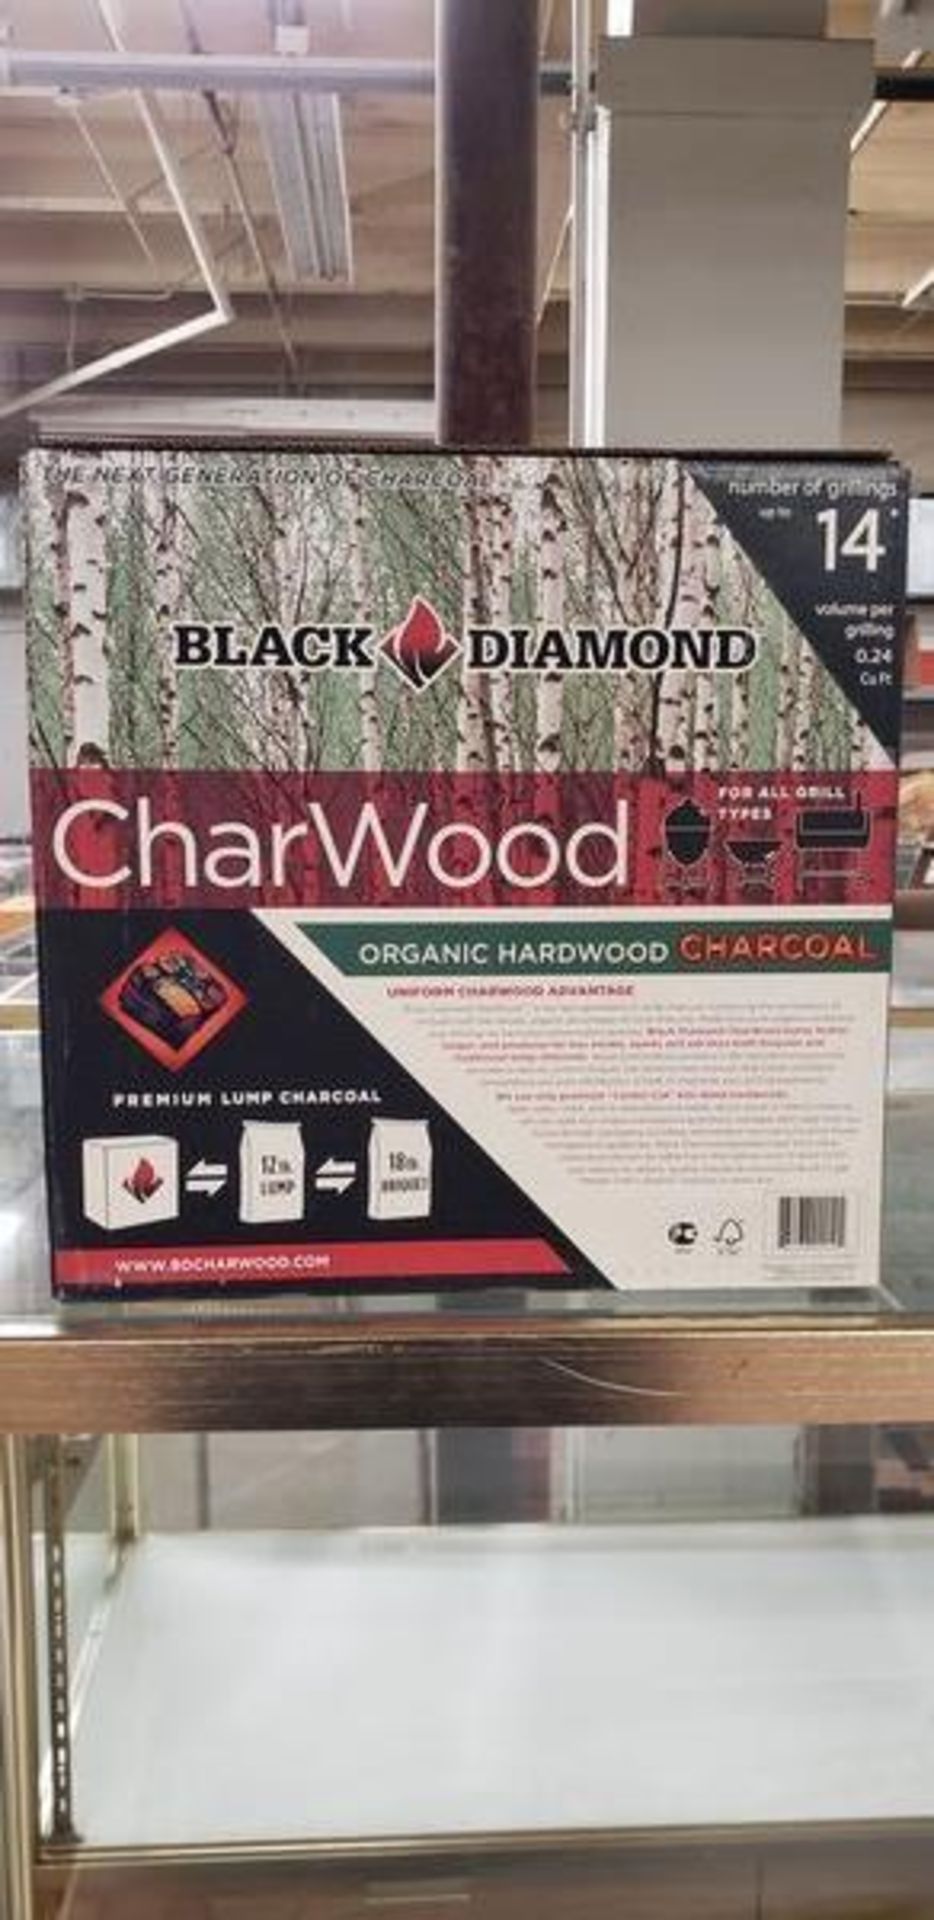 5 BOXES OF BLACK DIAMOND CHARWOOD LUMP CHARCOAL - 14 GRILLS PER BOX